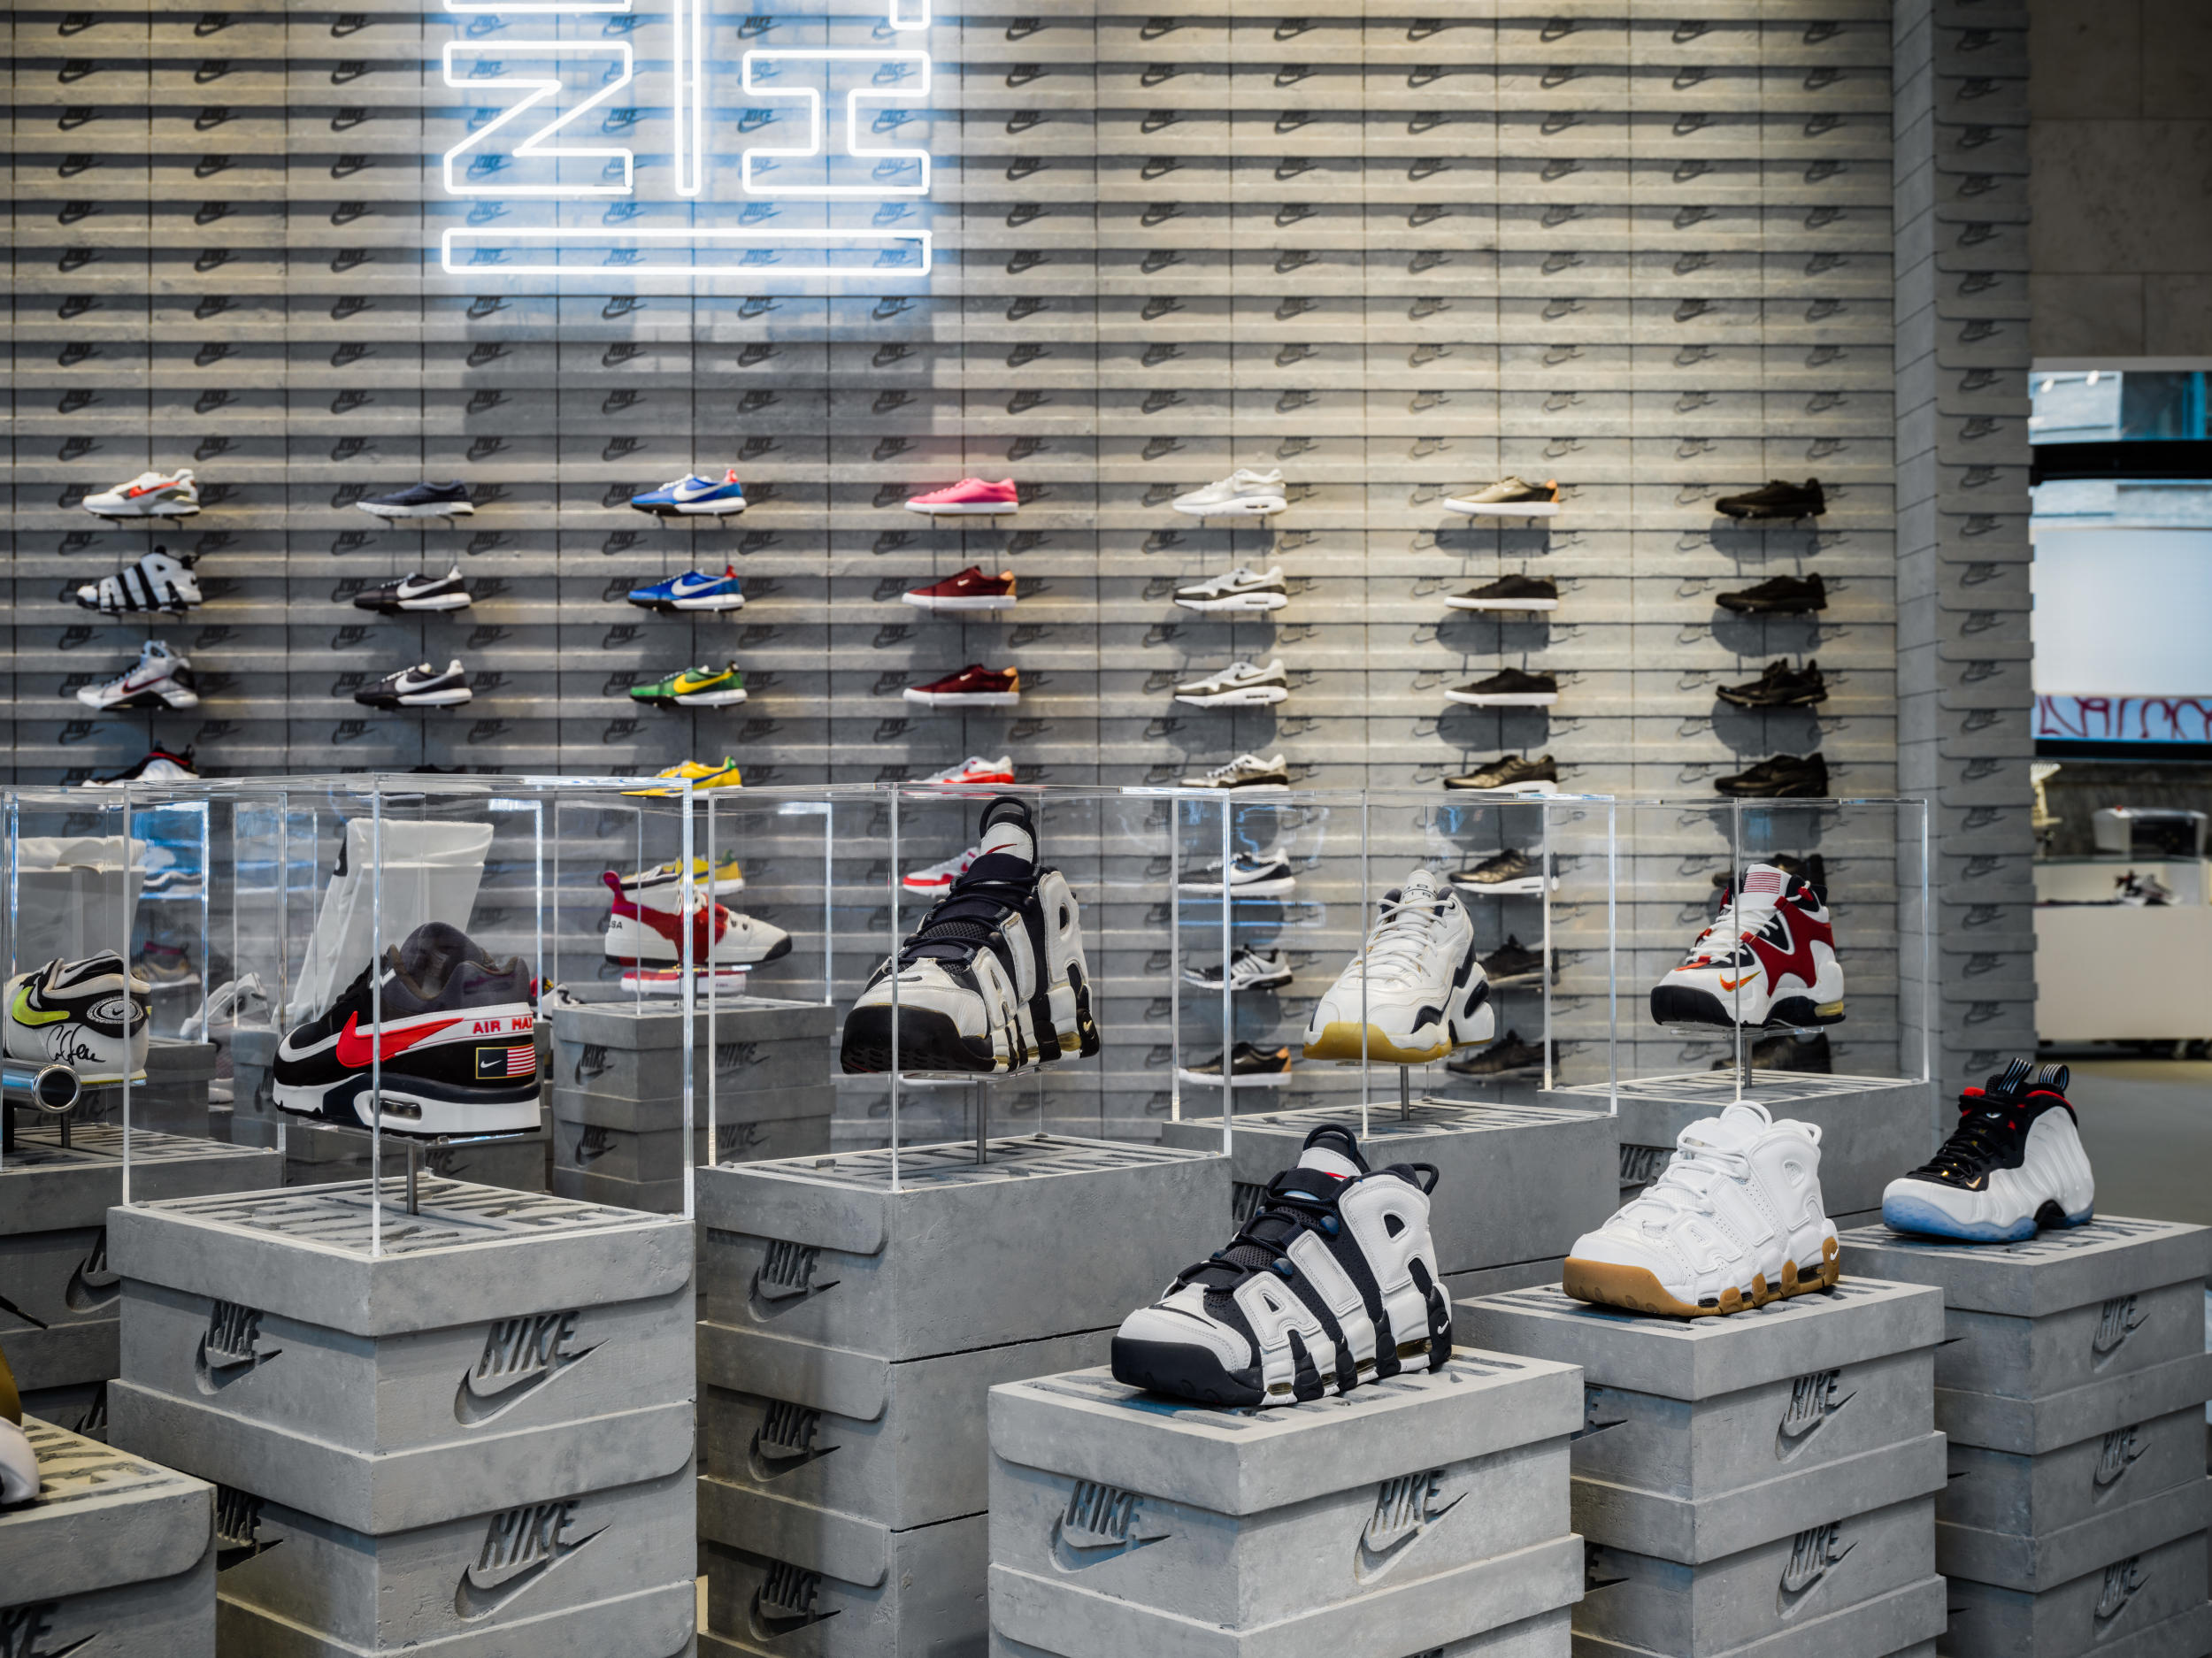 X shop магазин. Nike Sneakers магазин. Витрина кроссовок. Витрина магазина кроссовок. Стеллаж для кроссовок.